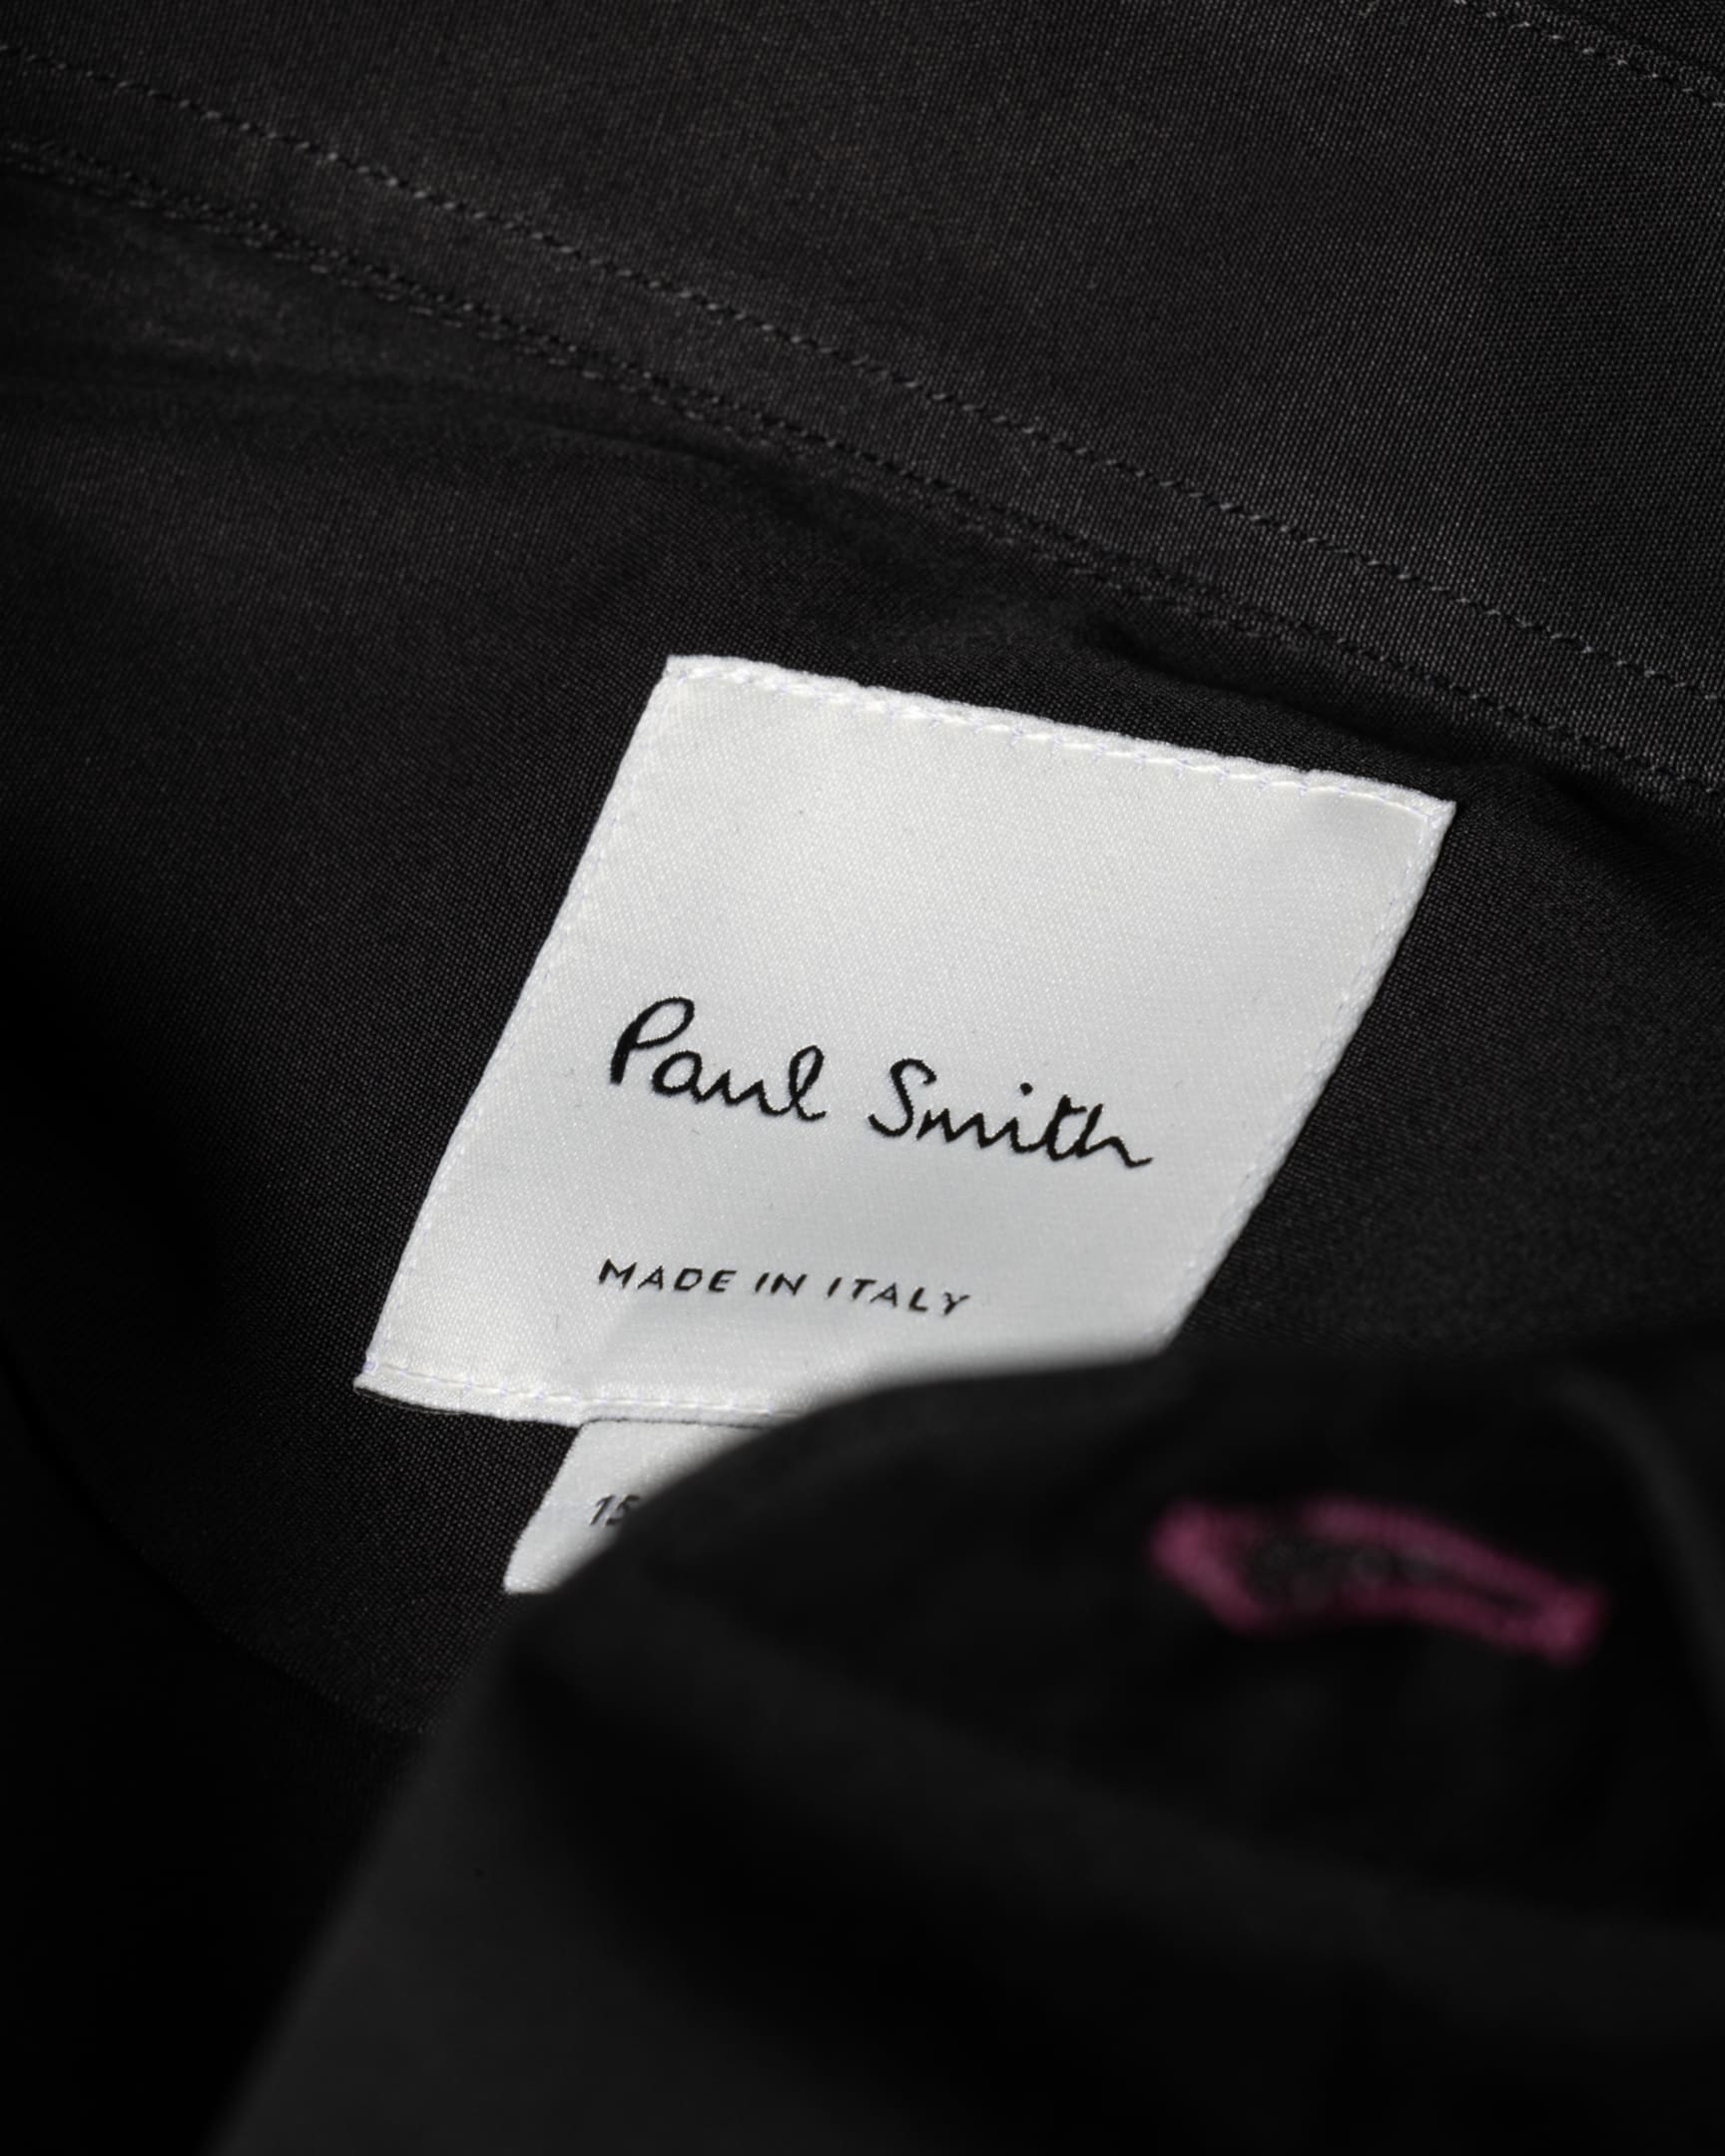 Detail View - Tailored-Fit Black Cotton 'Artist Stripe' Cuff Shirt Paul Smith